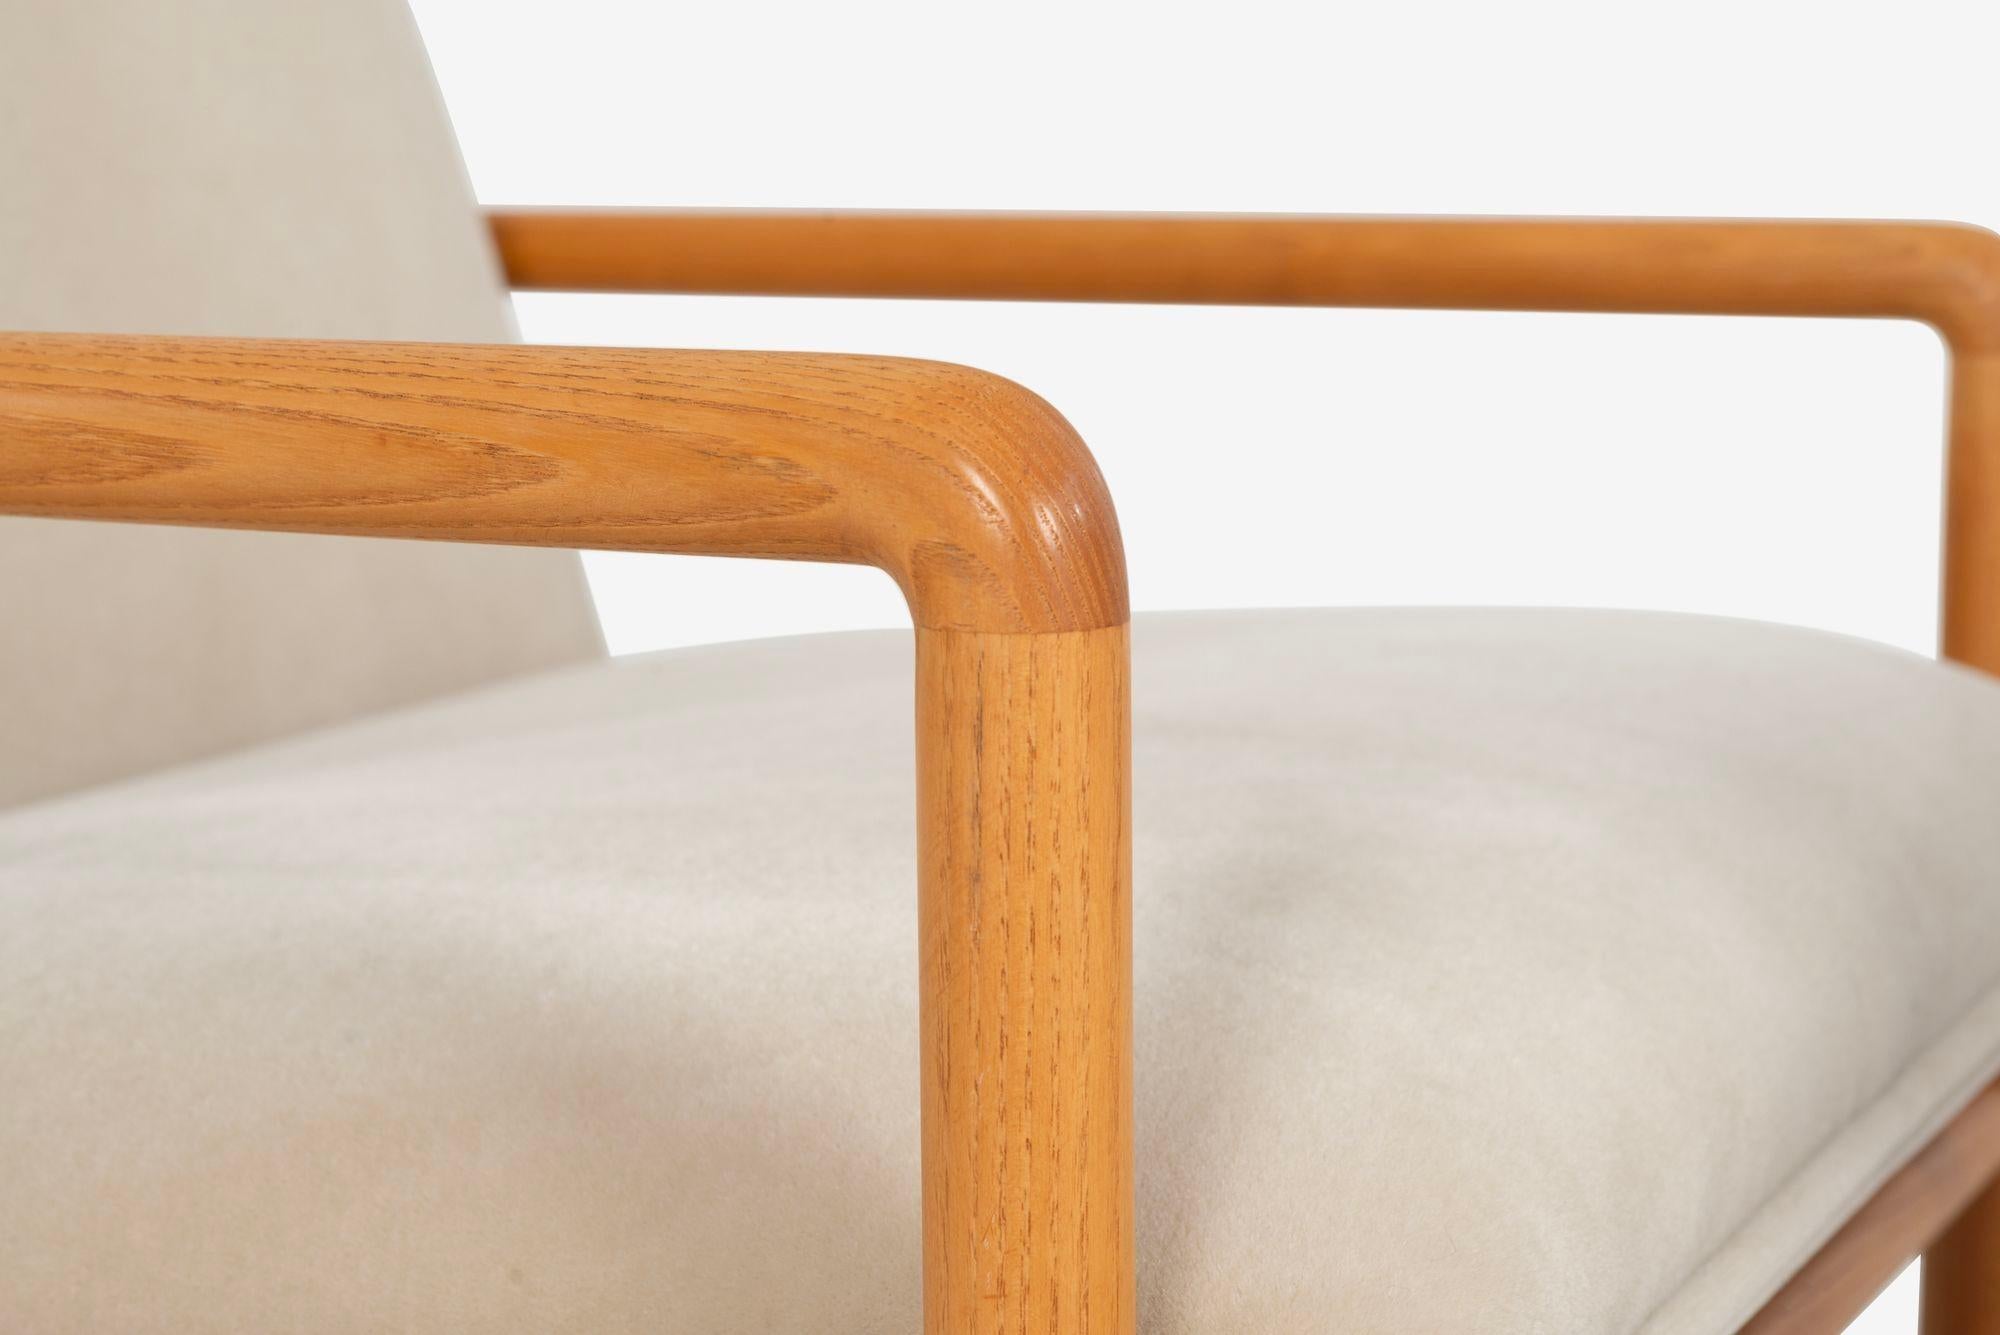 Ward Bennett Lounge Chairs in Solid Oak for Brickel Associates 1965c. For Sale 2